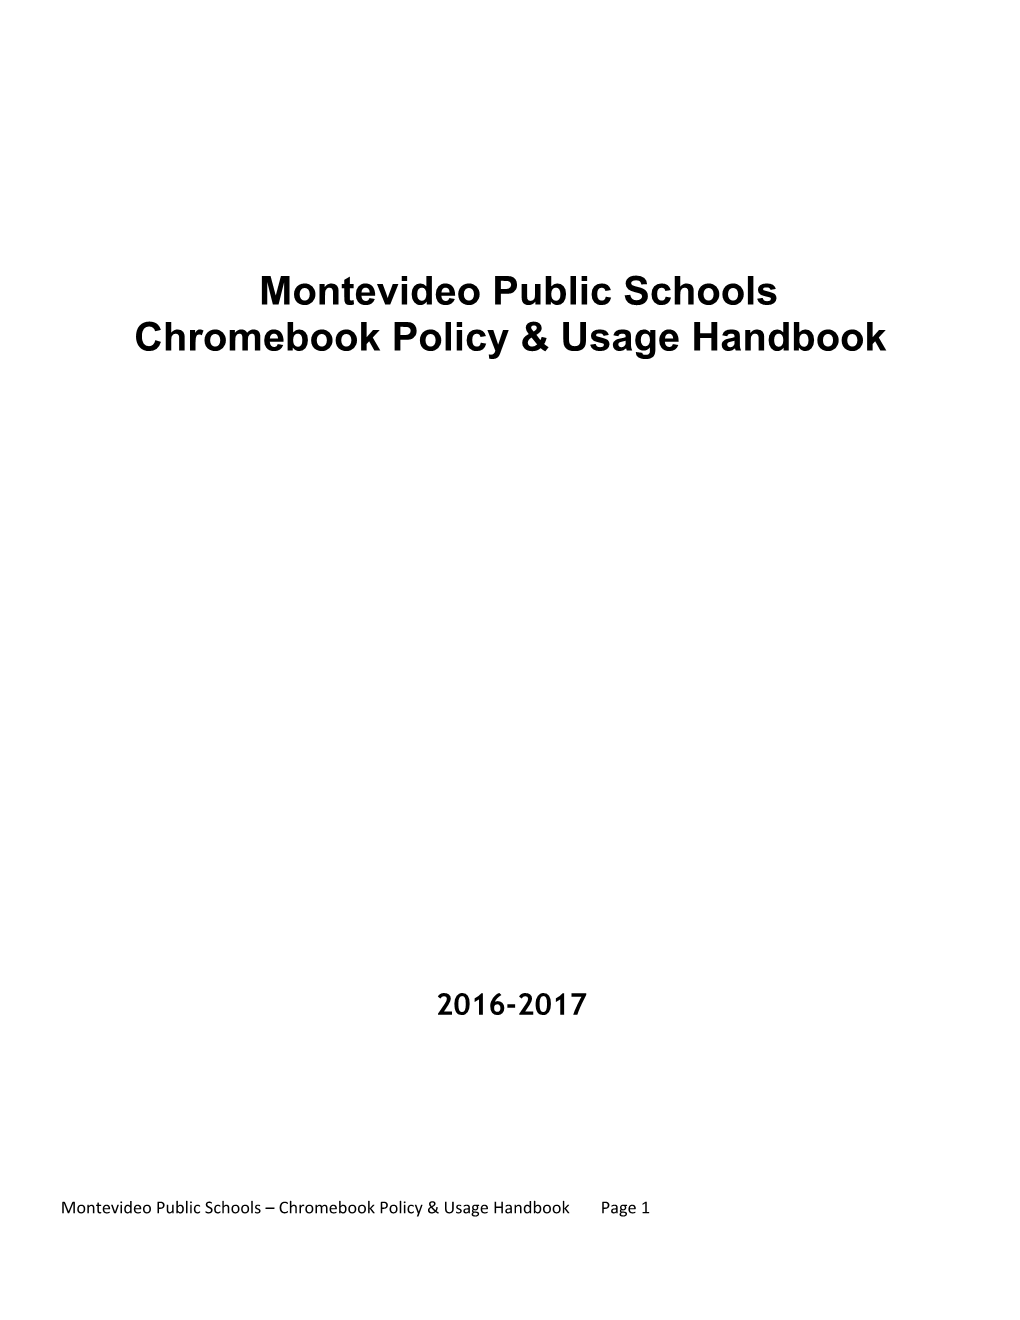 Chromebook Policy & Usage Handbook